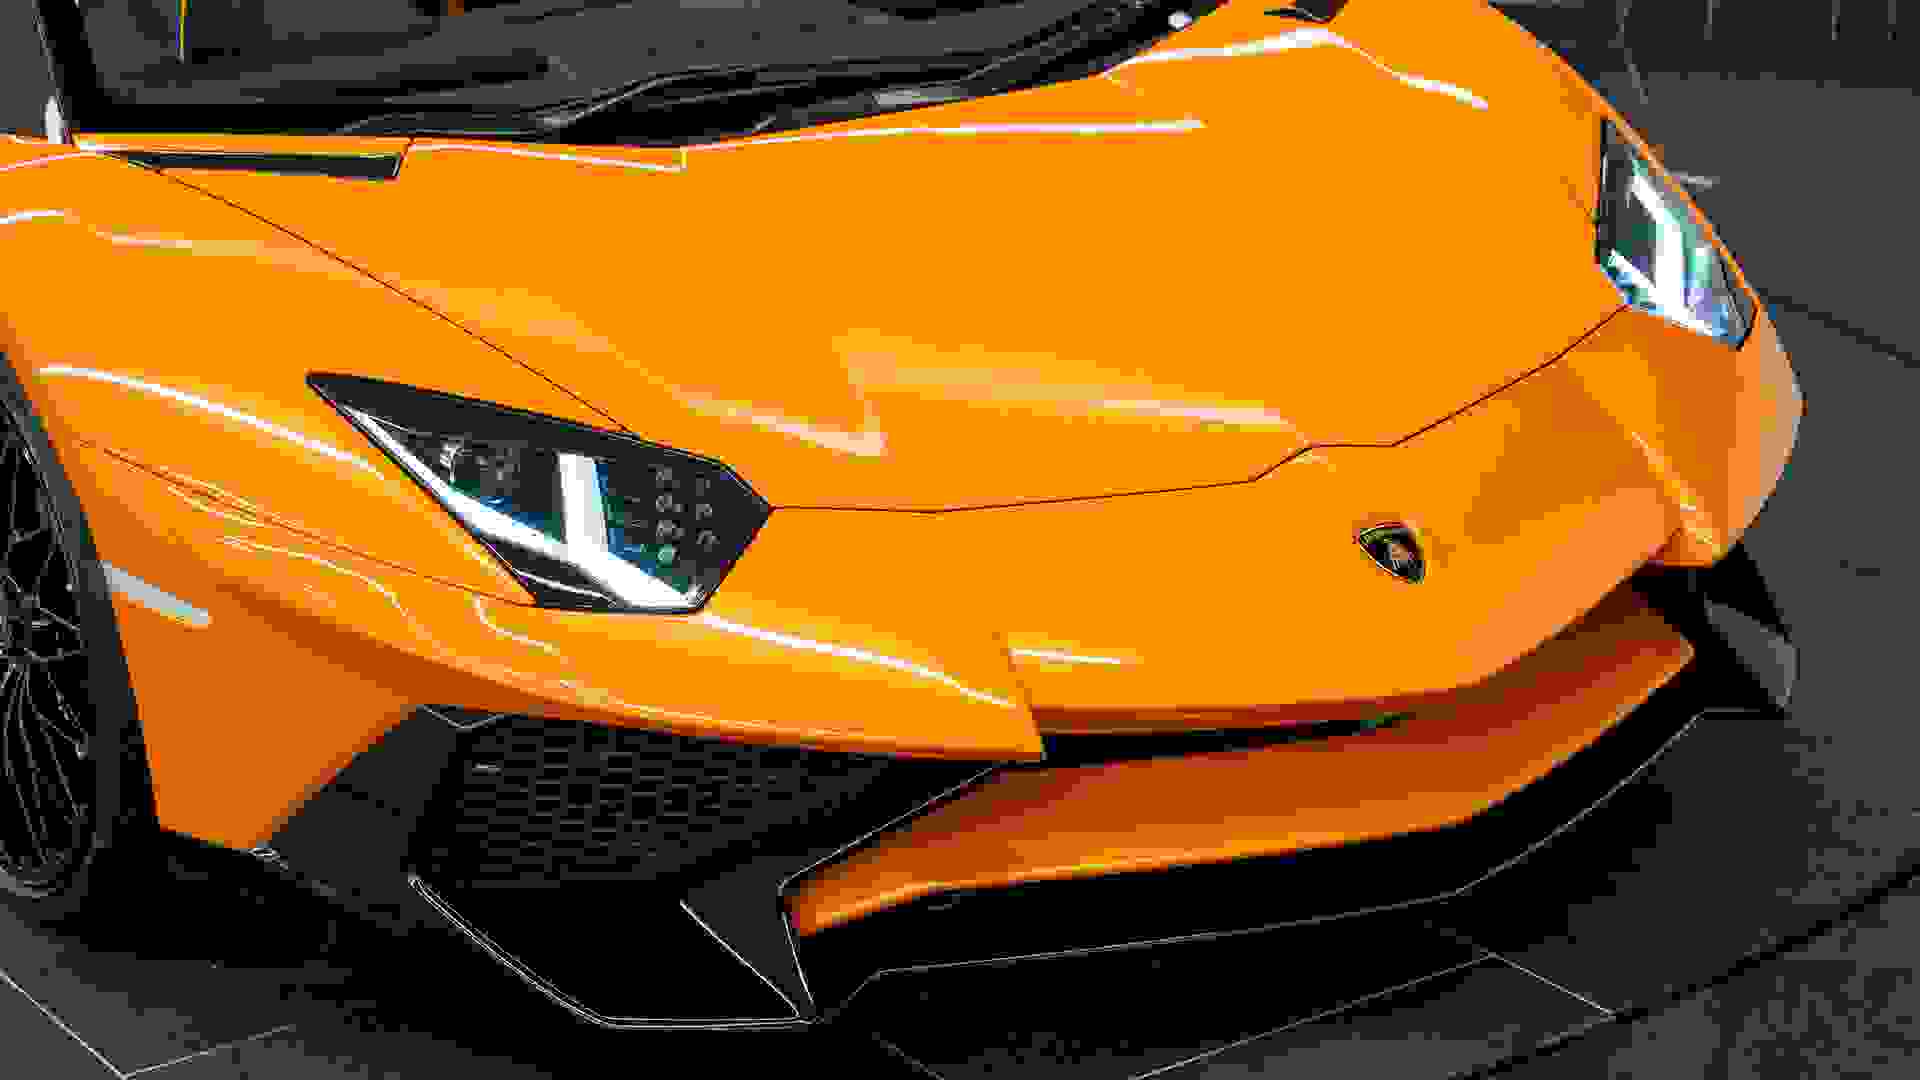 Lamborghini AVENTADOR SV Photo 79984855-5416-4ae6-ac47-4c5a9ccc70d1.jpg